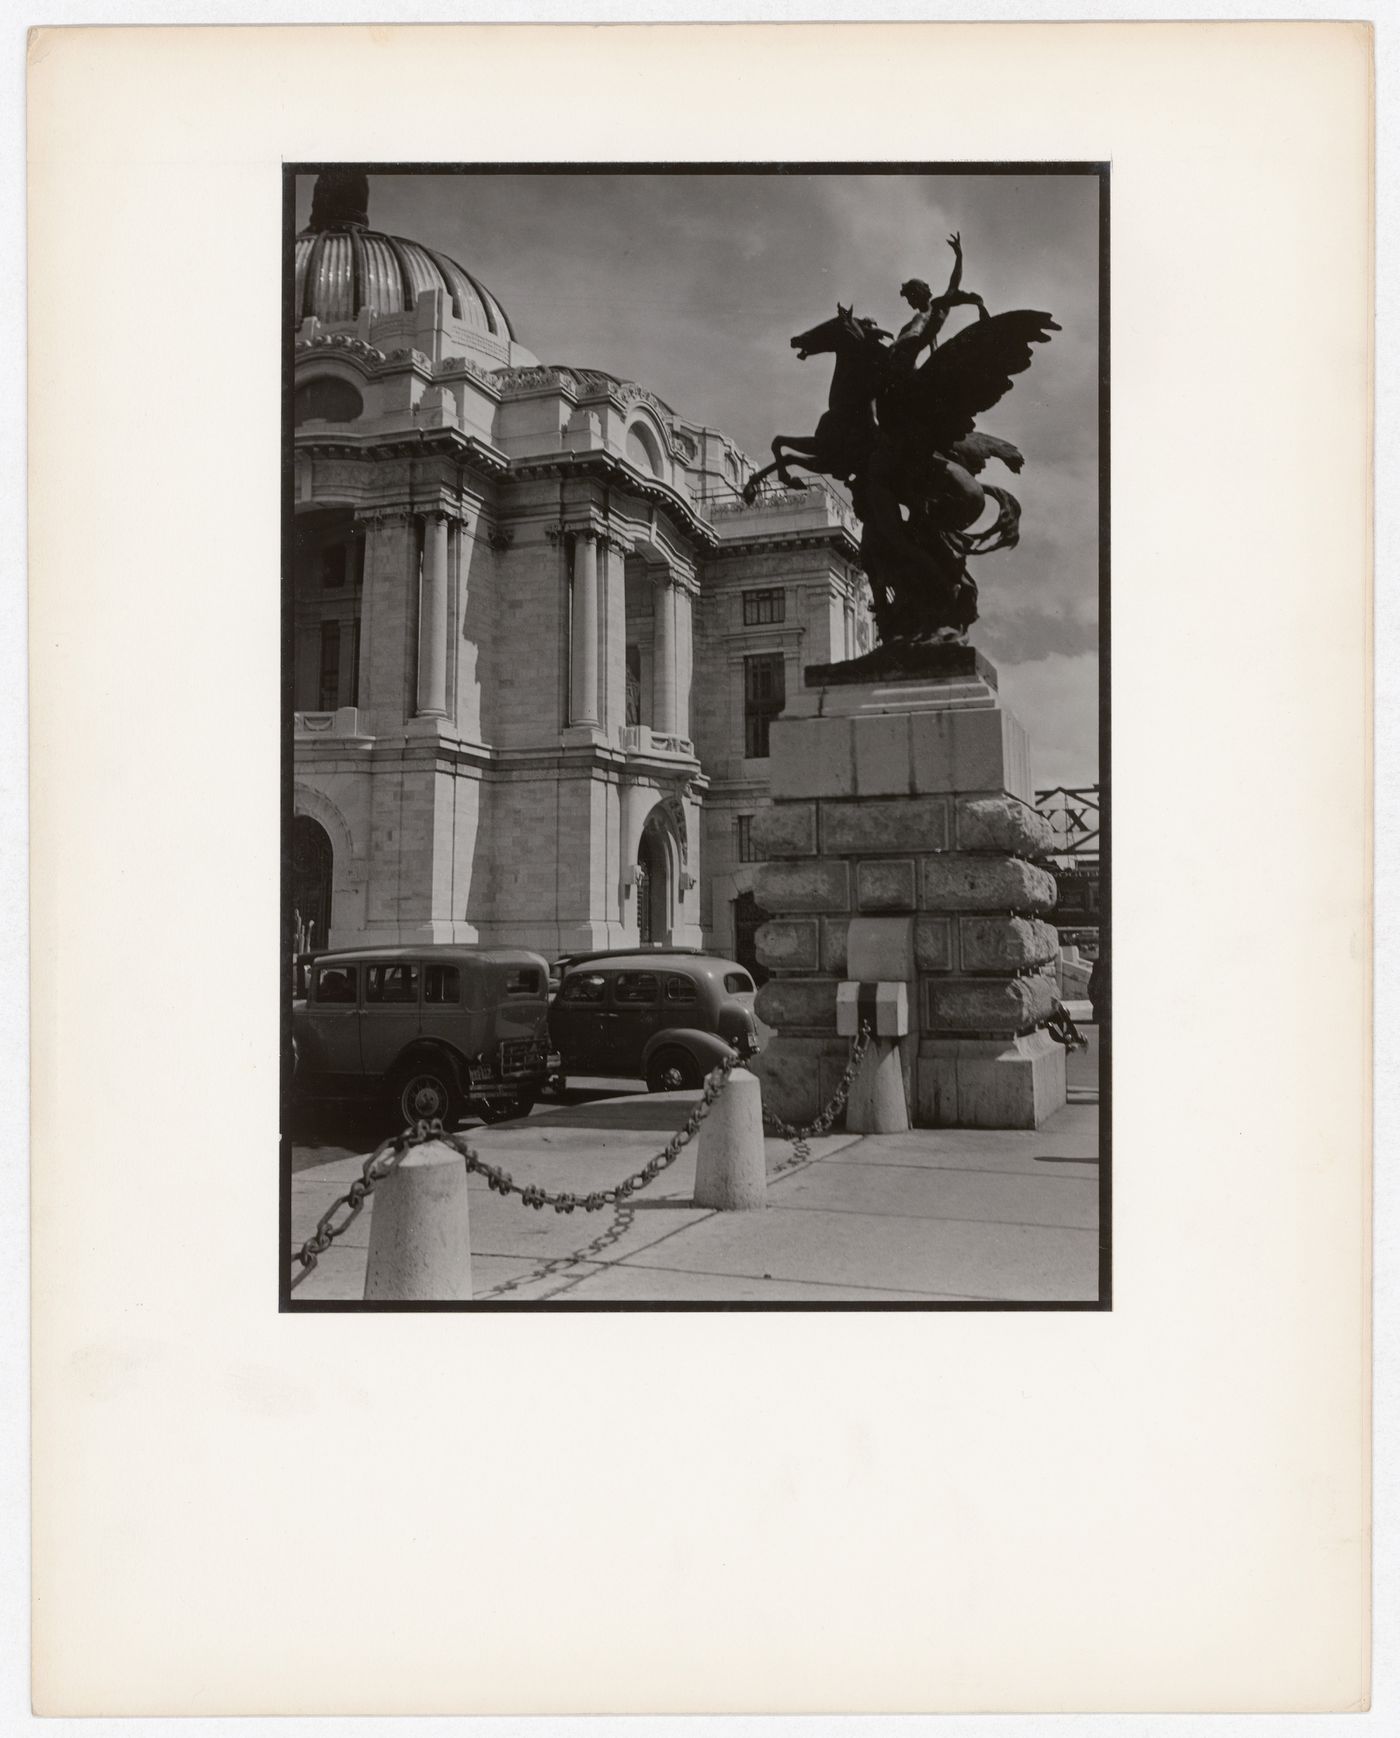 Partial view of Palacio de Bellas Artes with a statue in the foreground, Mexico City, Mexico